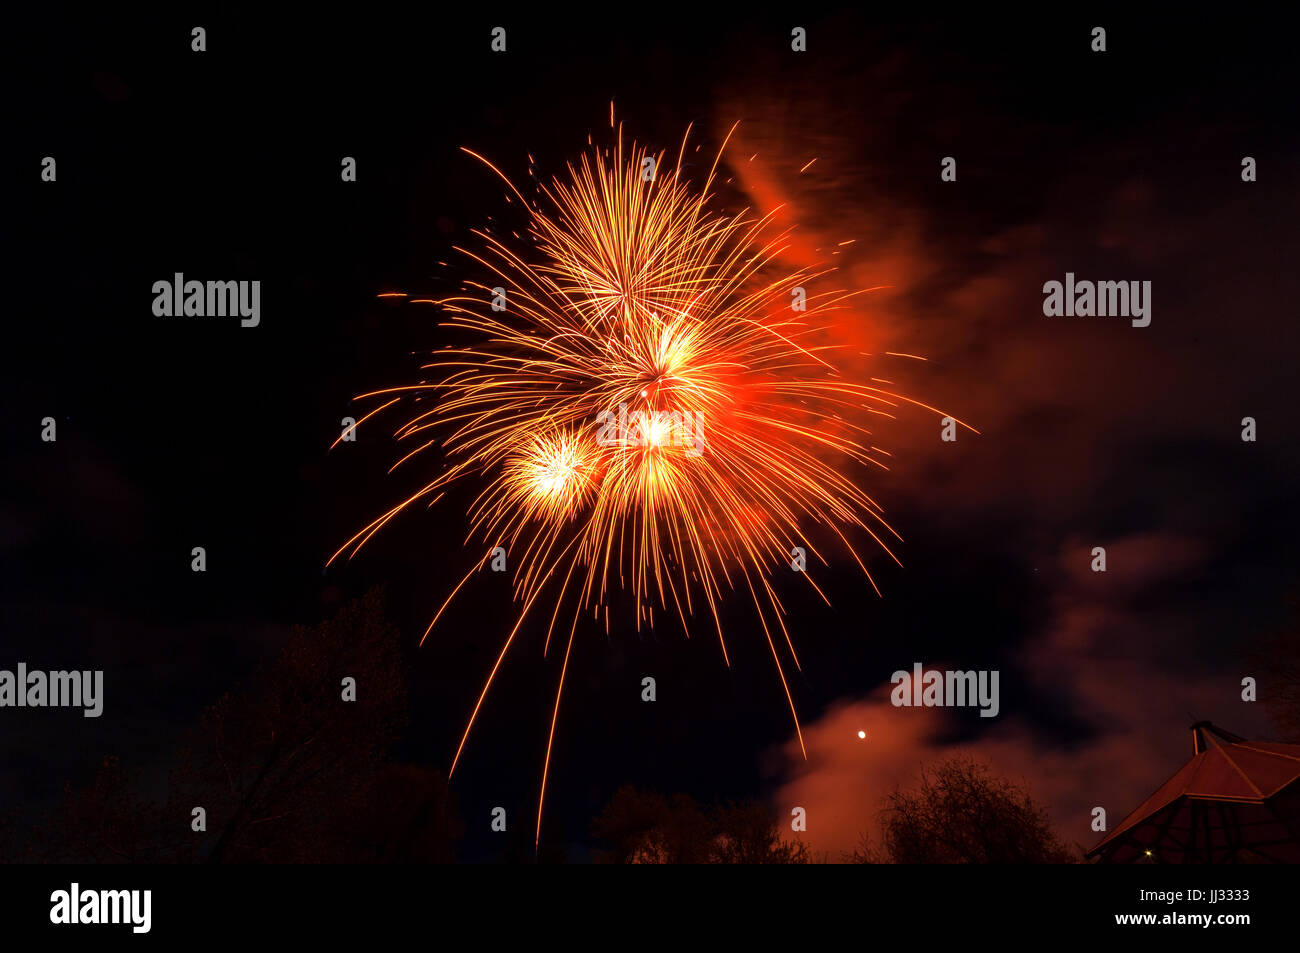 Fireworks light up close-up against dark sky Stock Photo